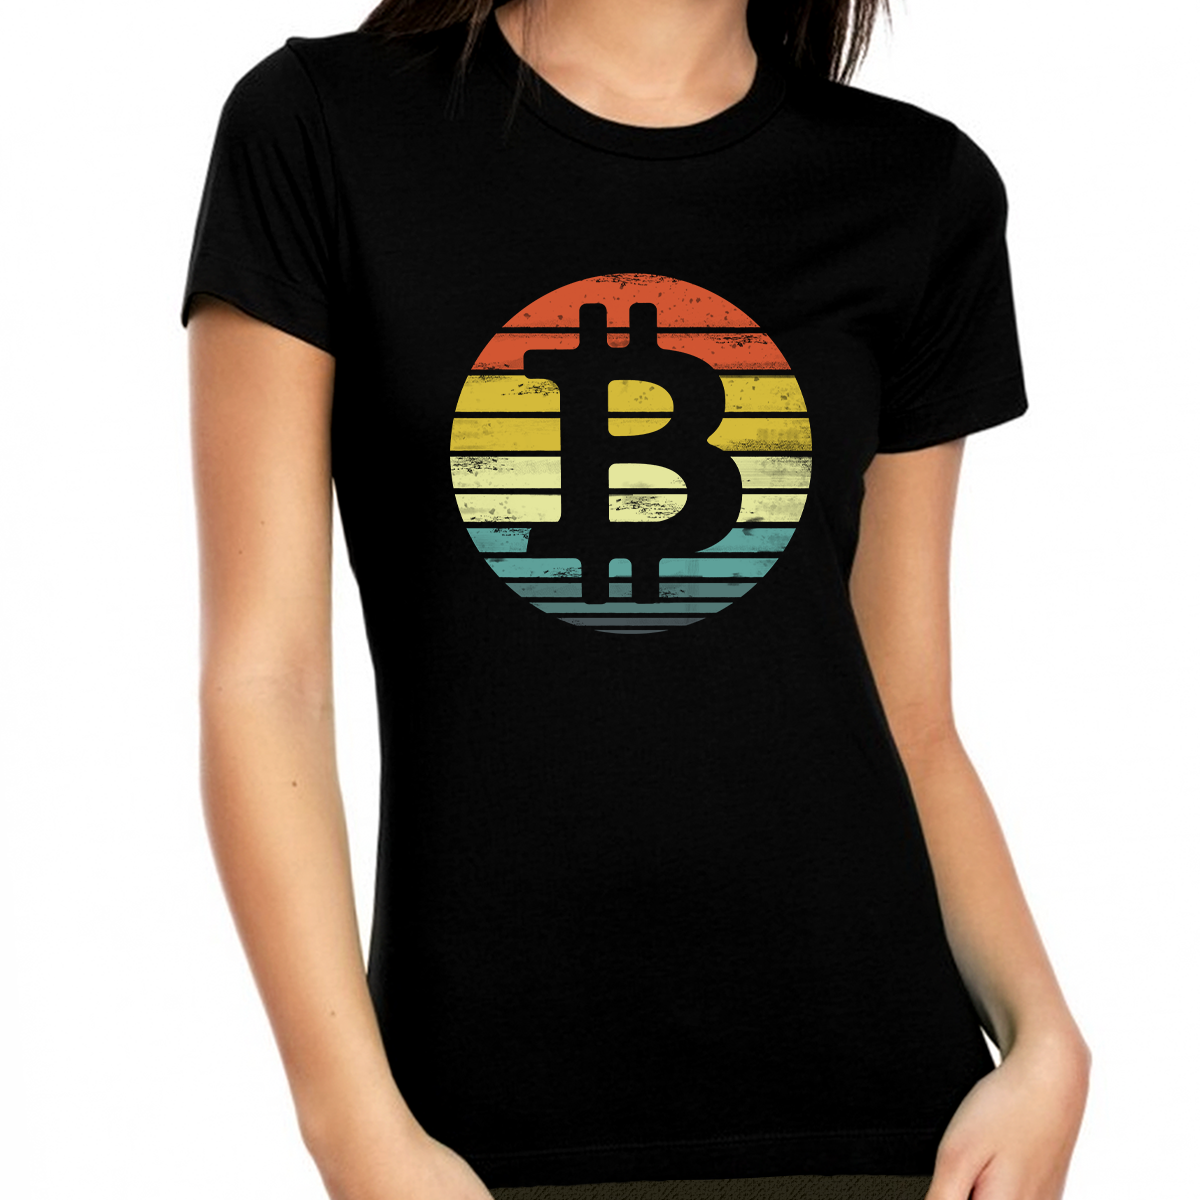 Vintage Bitcoin Shirt for Women Bitcoin Logo Crypto Shirt Bitcoin Gift ETH Womens Retro Bitcoin Shirts